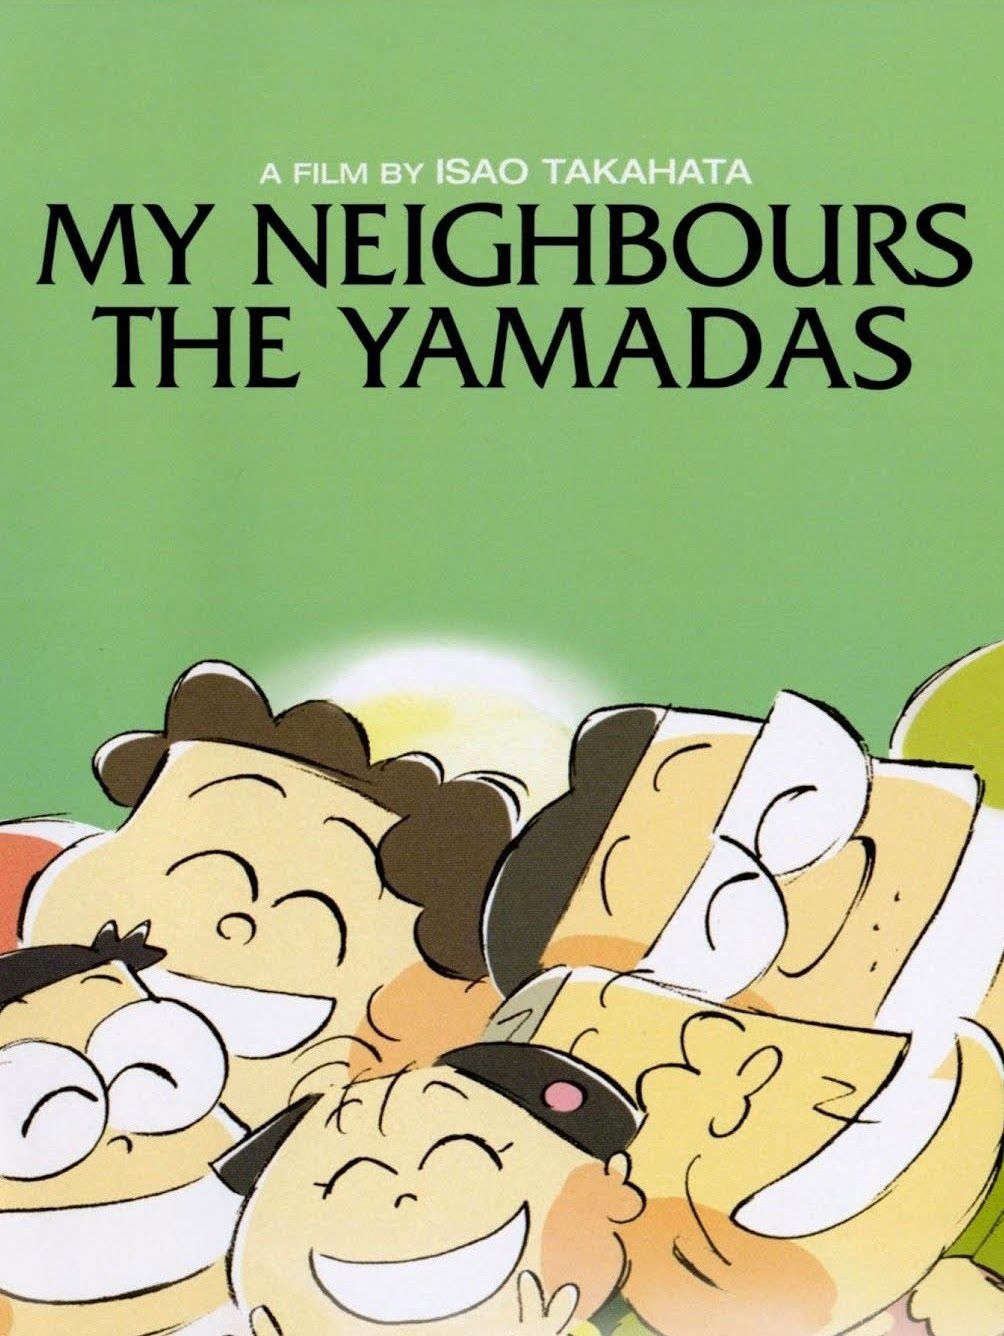 My Neighbors the Yamadas Poster